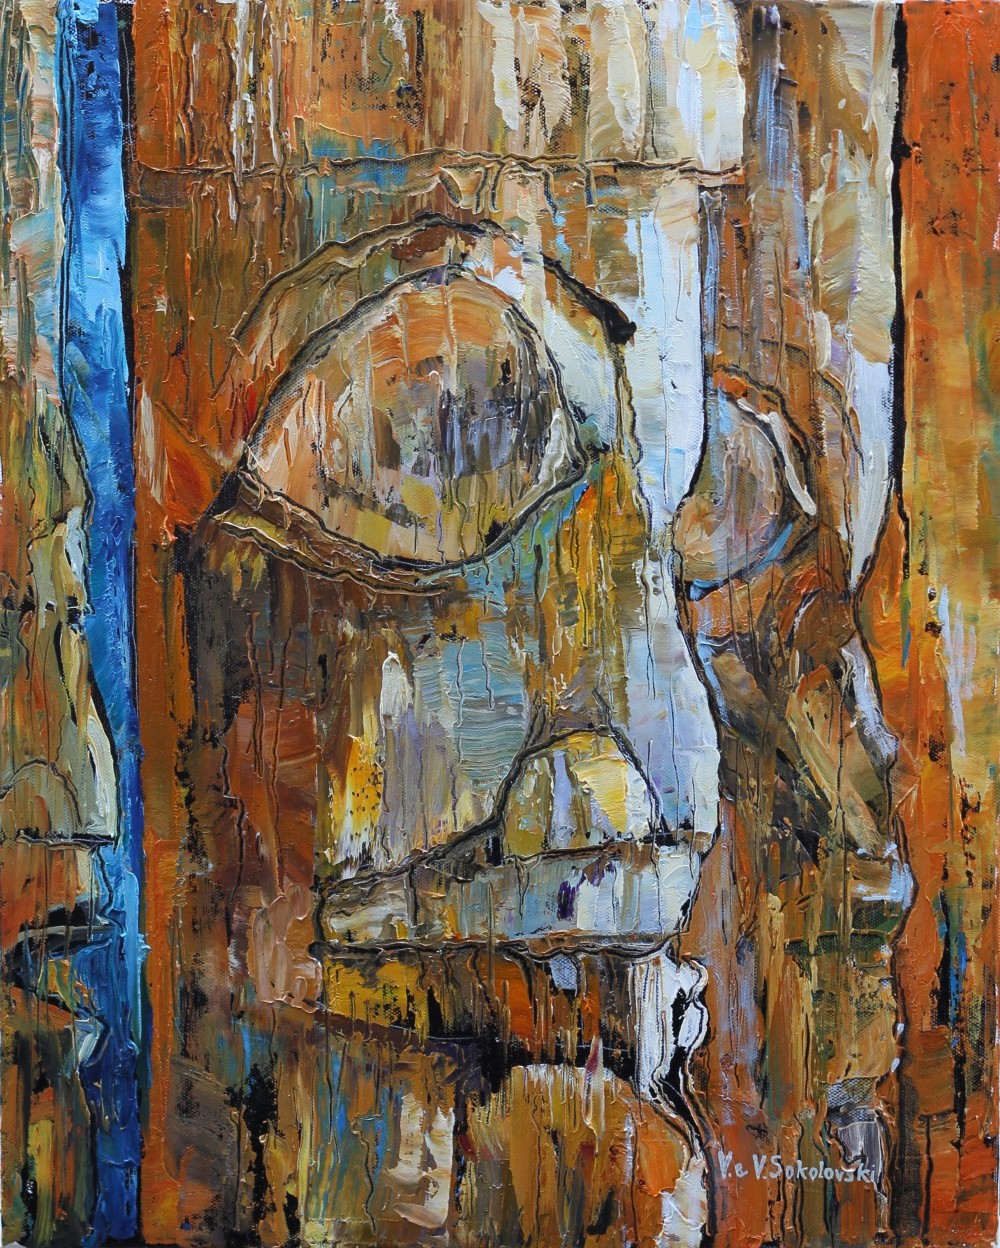 Haida Head - Oil on canvas, 20x16 - Valeri Sokolovski